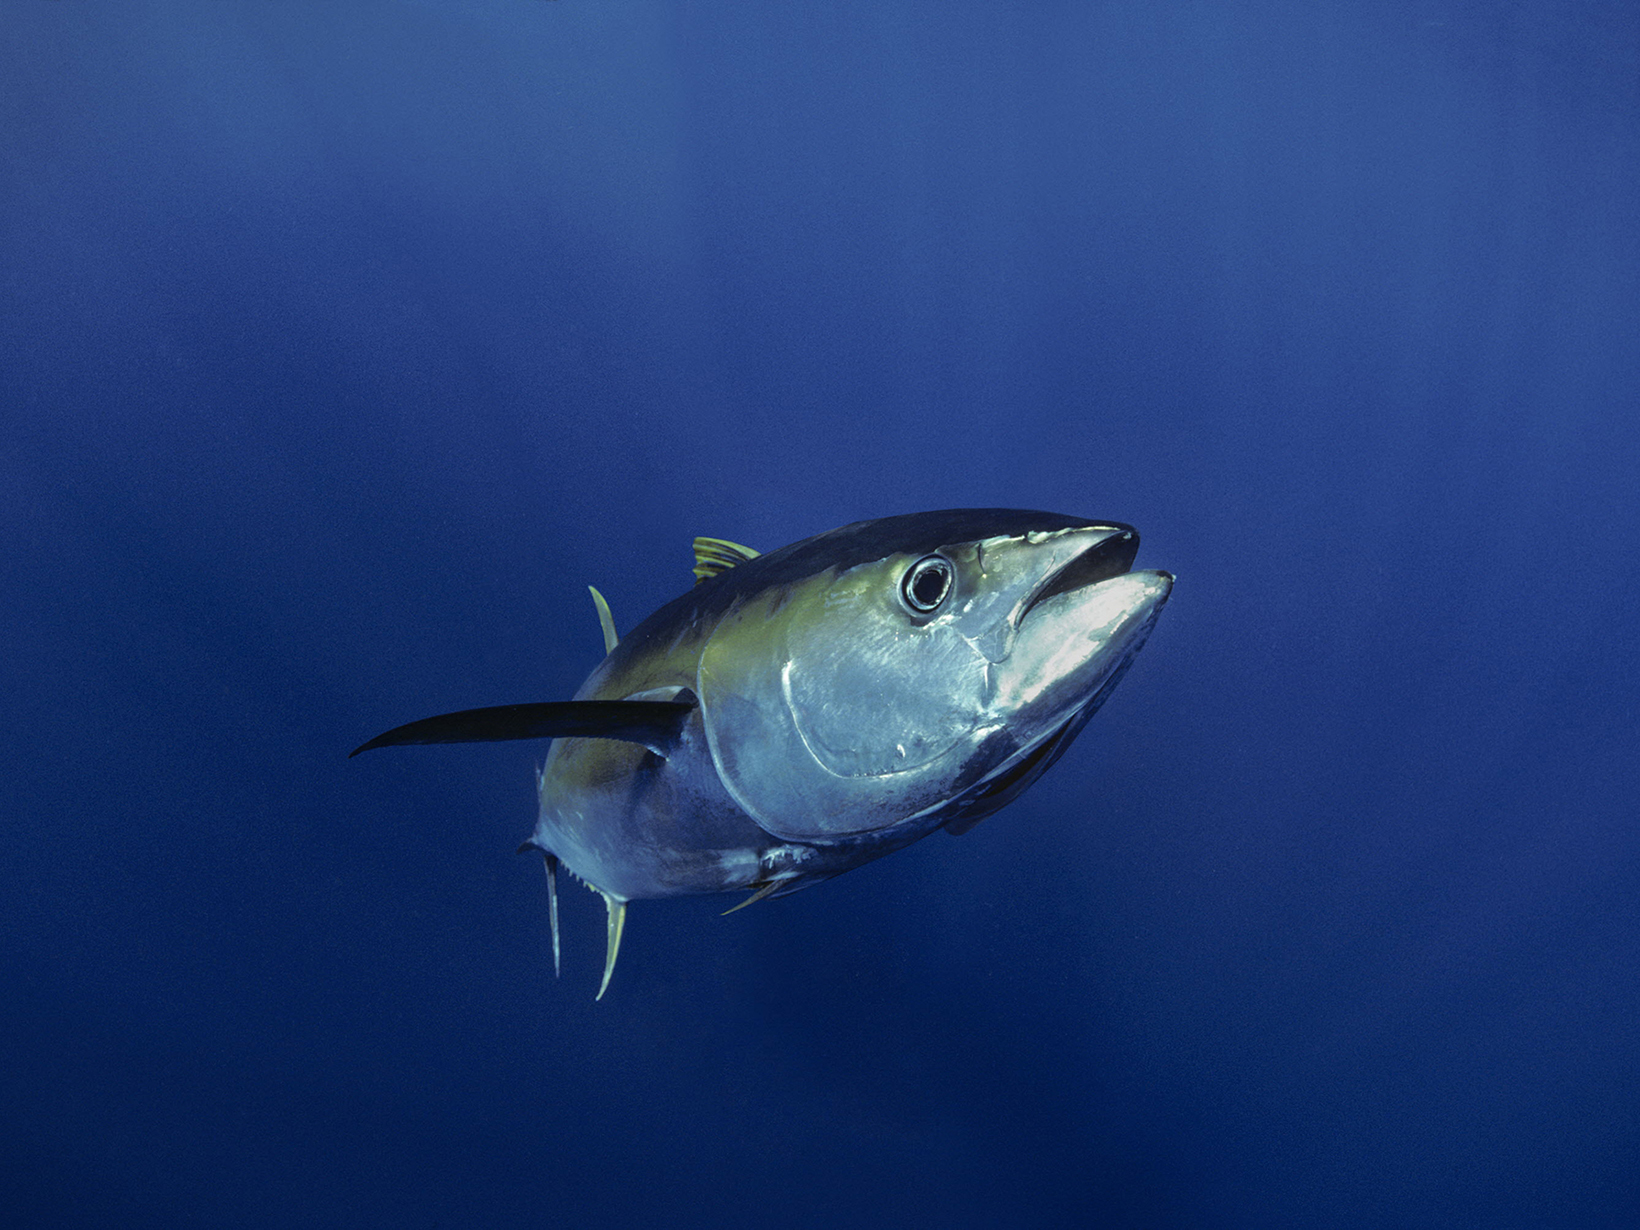 Pacific Long-Range Angler Lands Potential World-Record Yellowfin Tuna